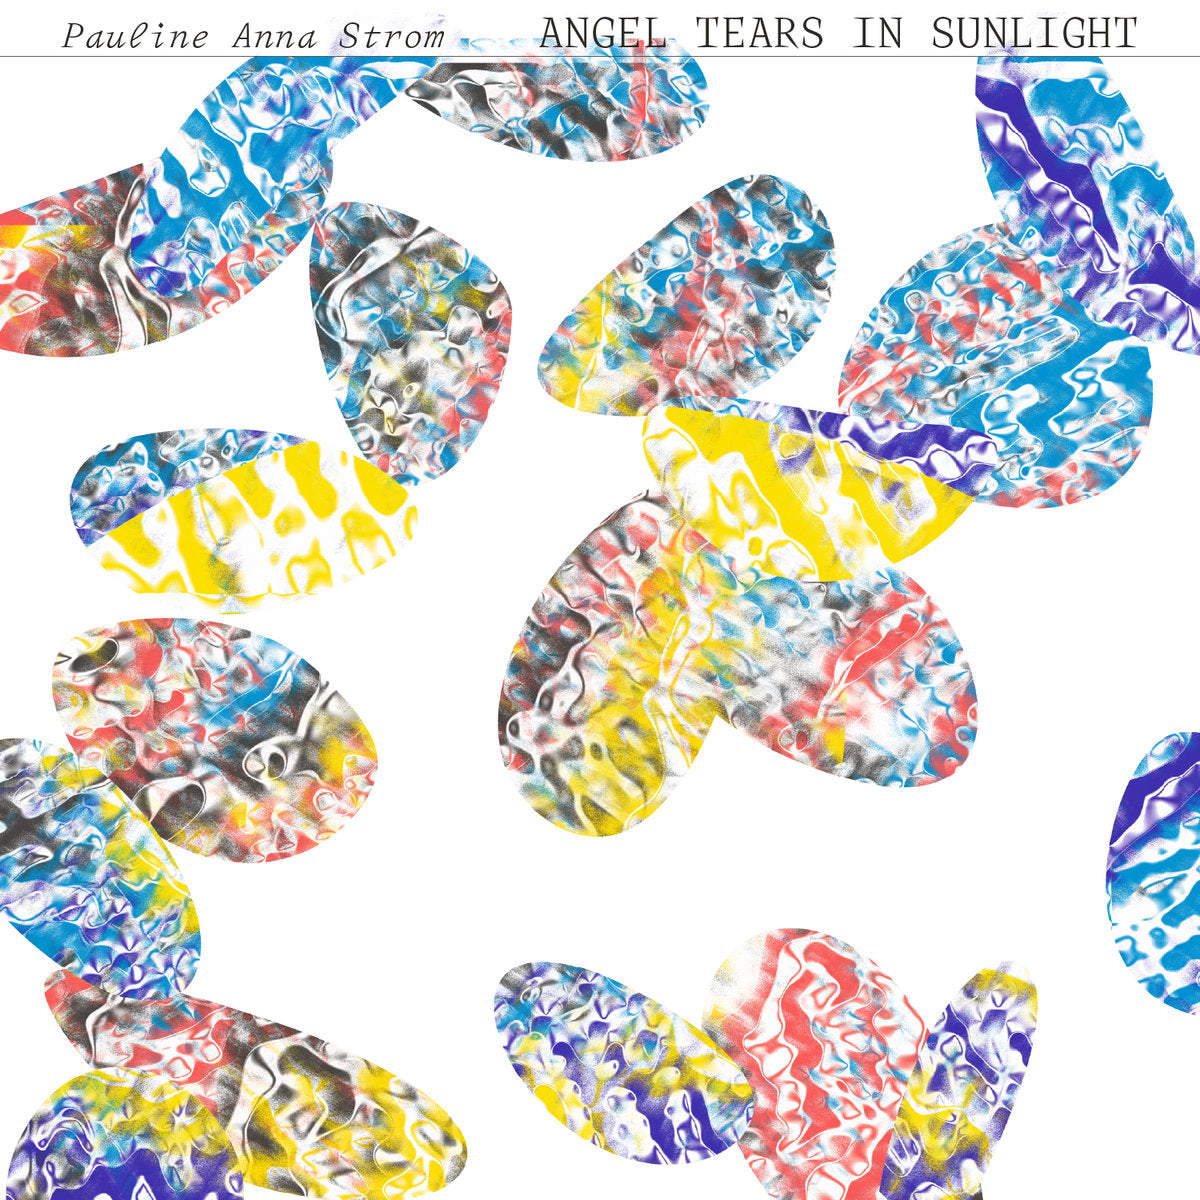 PAULINE ANNA STROM - ANGEL TEARS IN SUNLIGHT Clear/Red/Yellow Swirled Vinyl LP